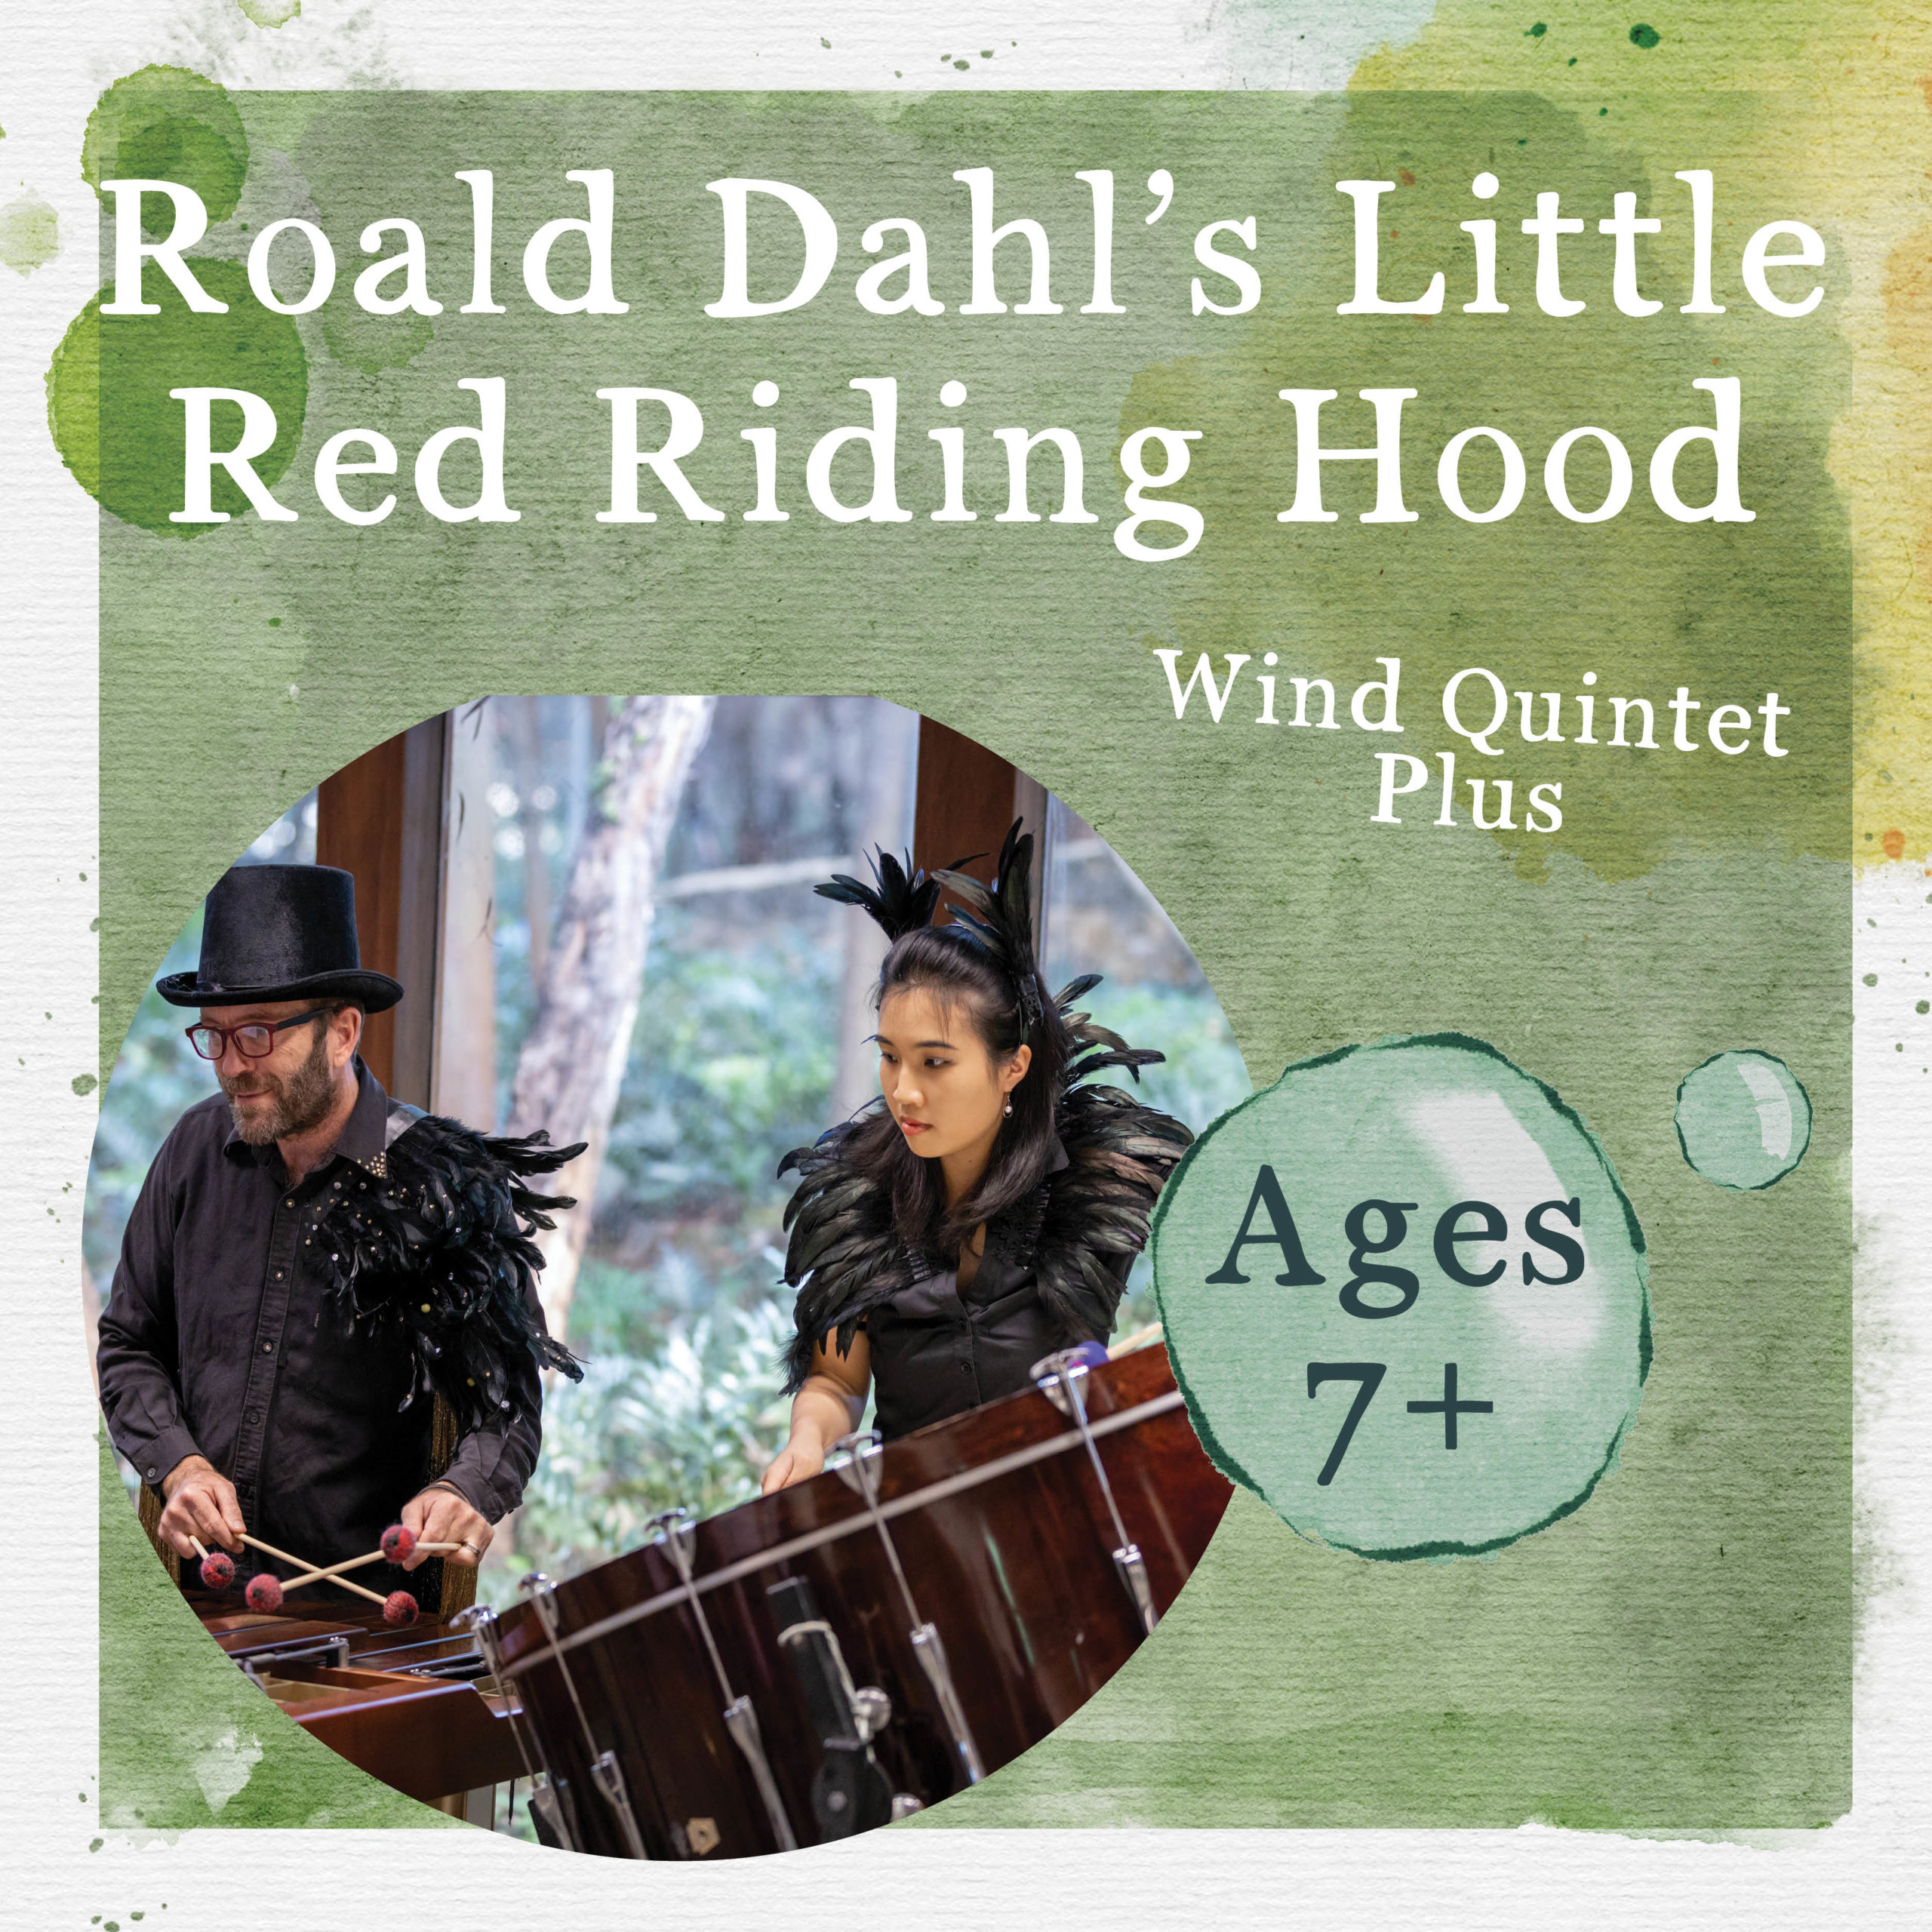 Wind Quintet Plus present Roald Dahl's Little Red Riding Hood